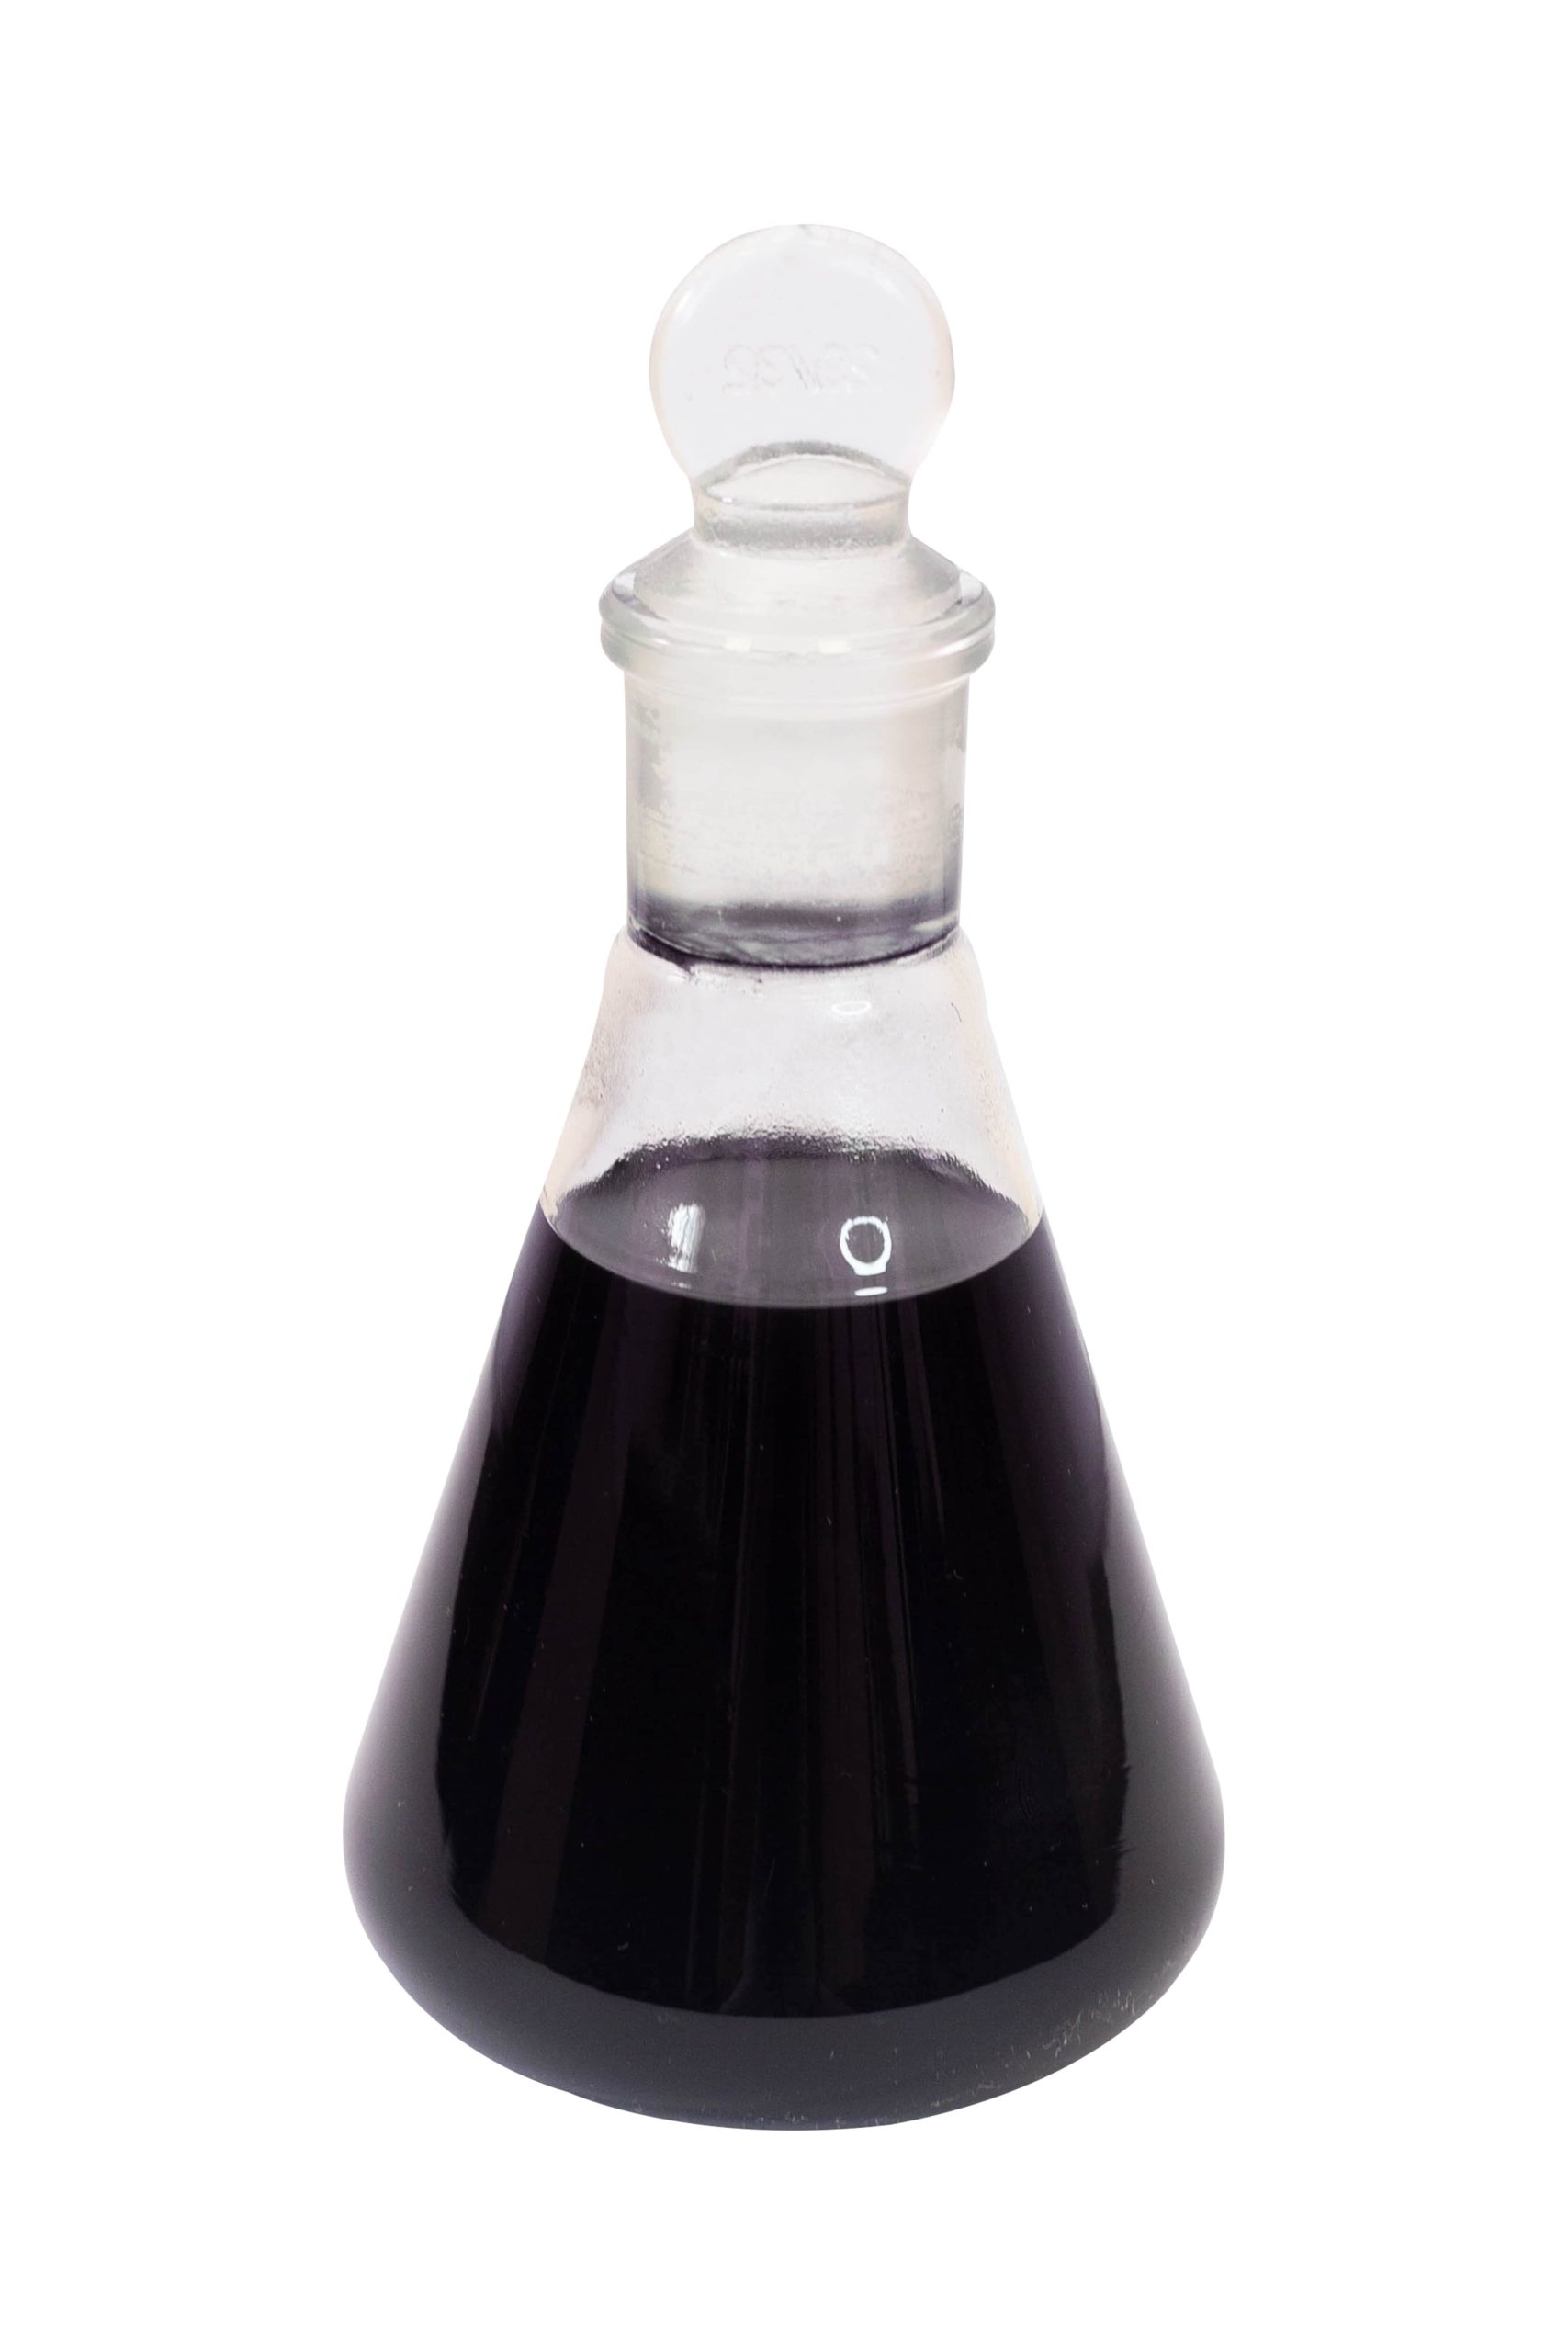 Liquid thiokol grade 32